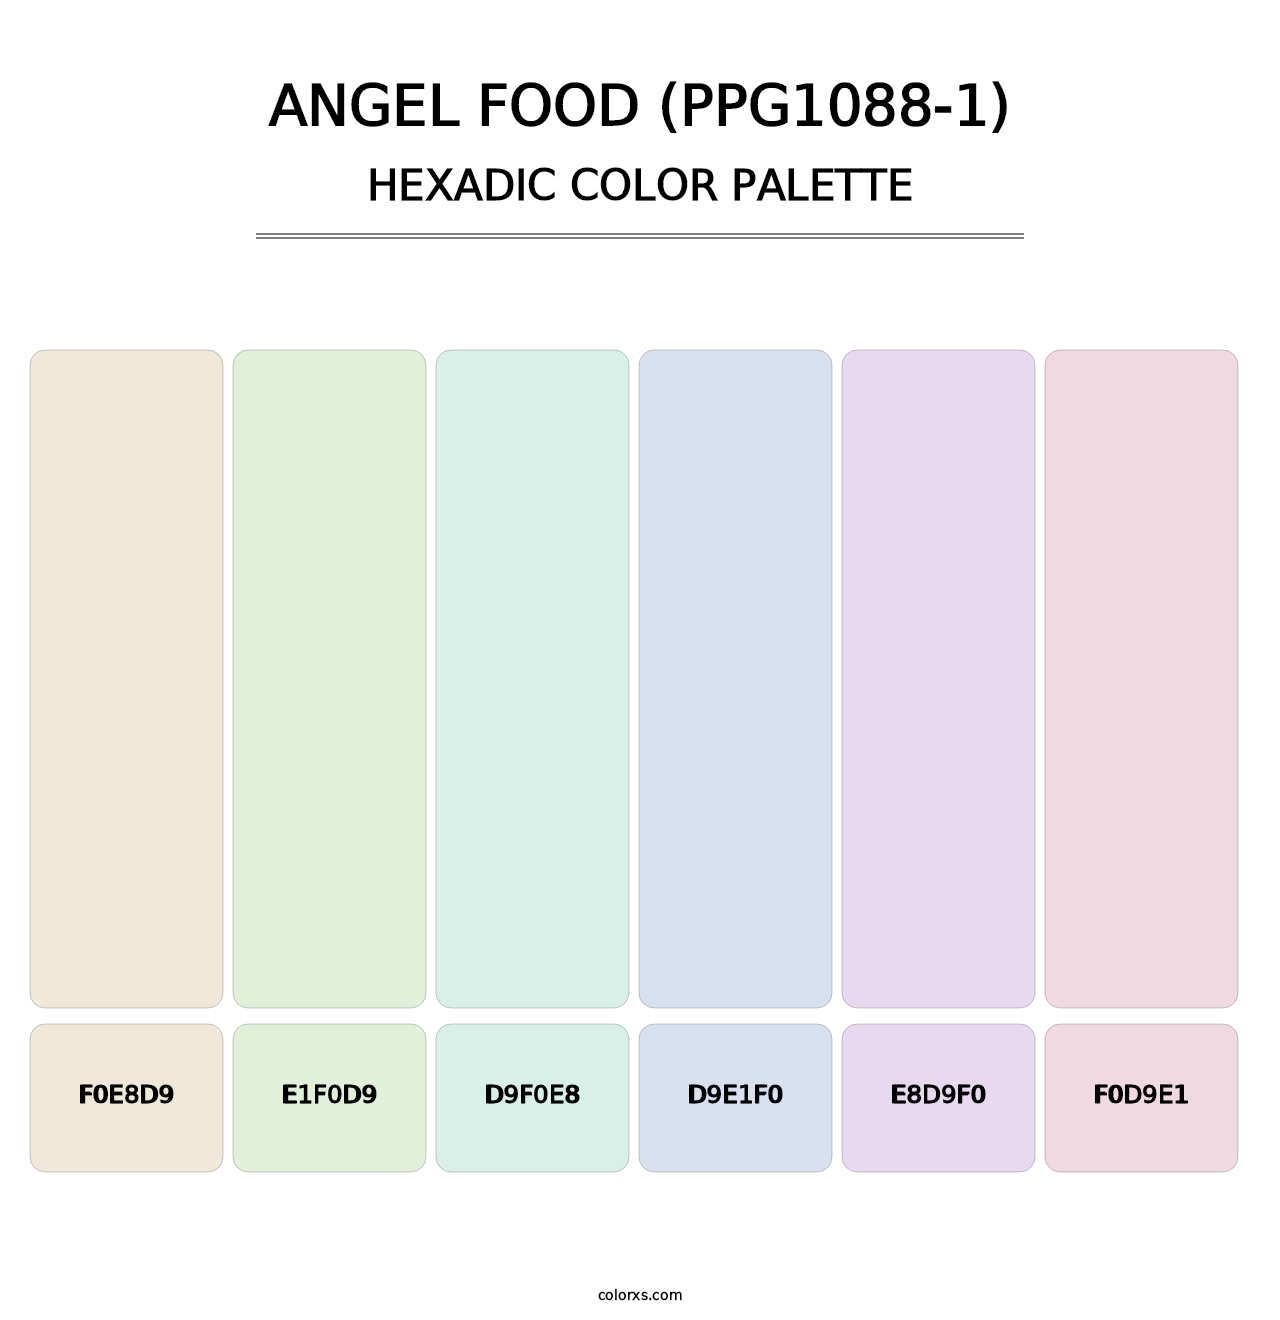 Angel Food (PPG1088-1) - Hexadic Color Palette